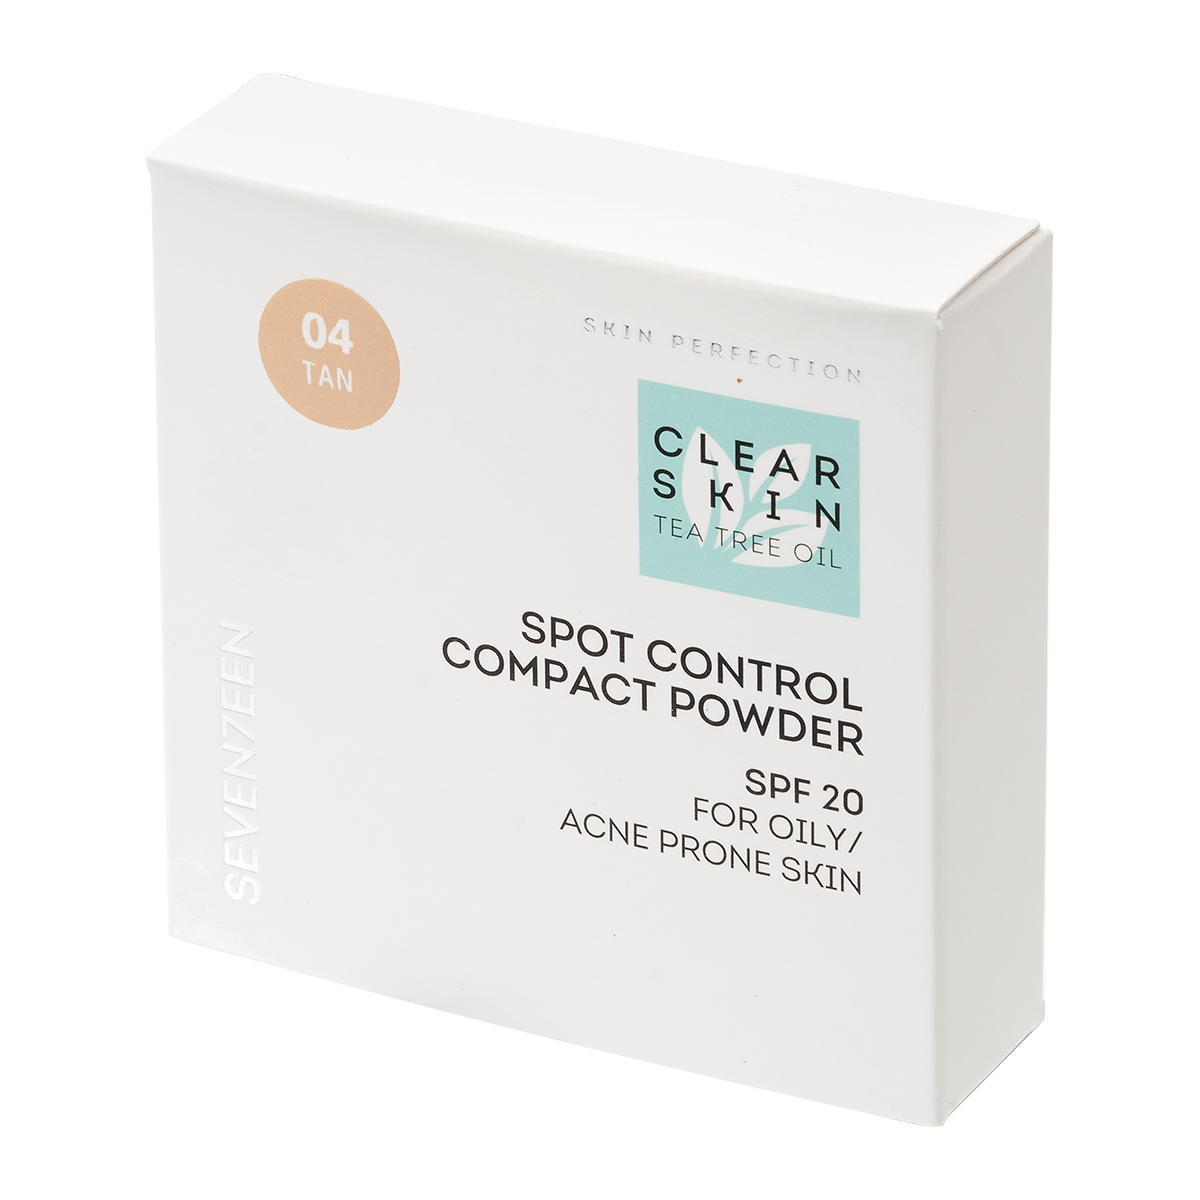 Clear Skin Spot Control Compact Powder SPF 20